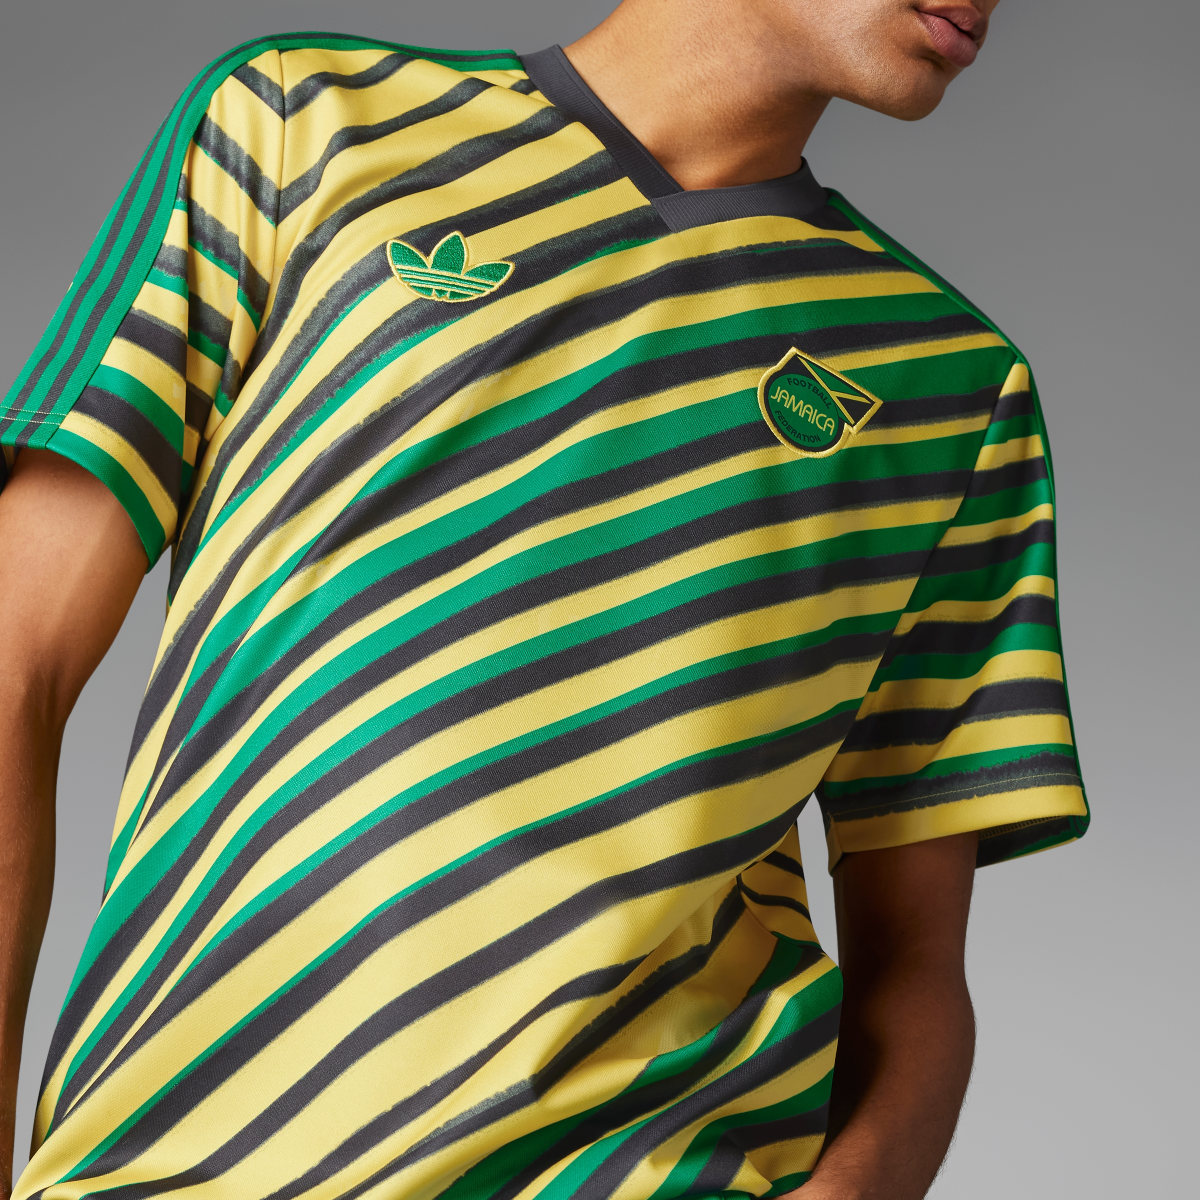 Adidas Jamaica Trefoil Jersey. 10